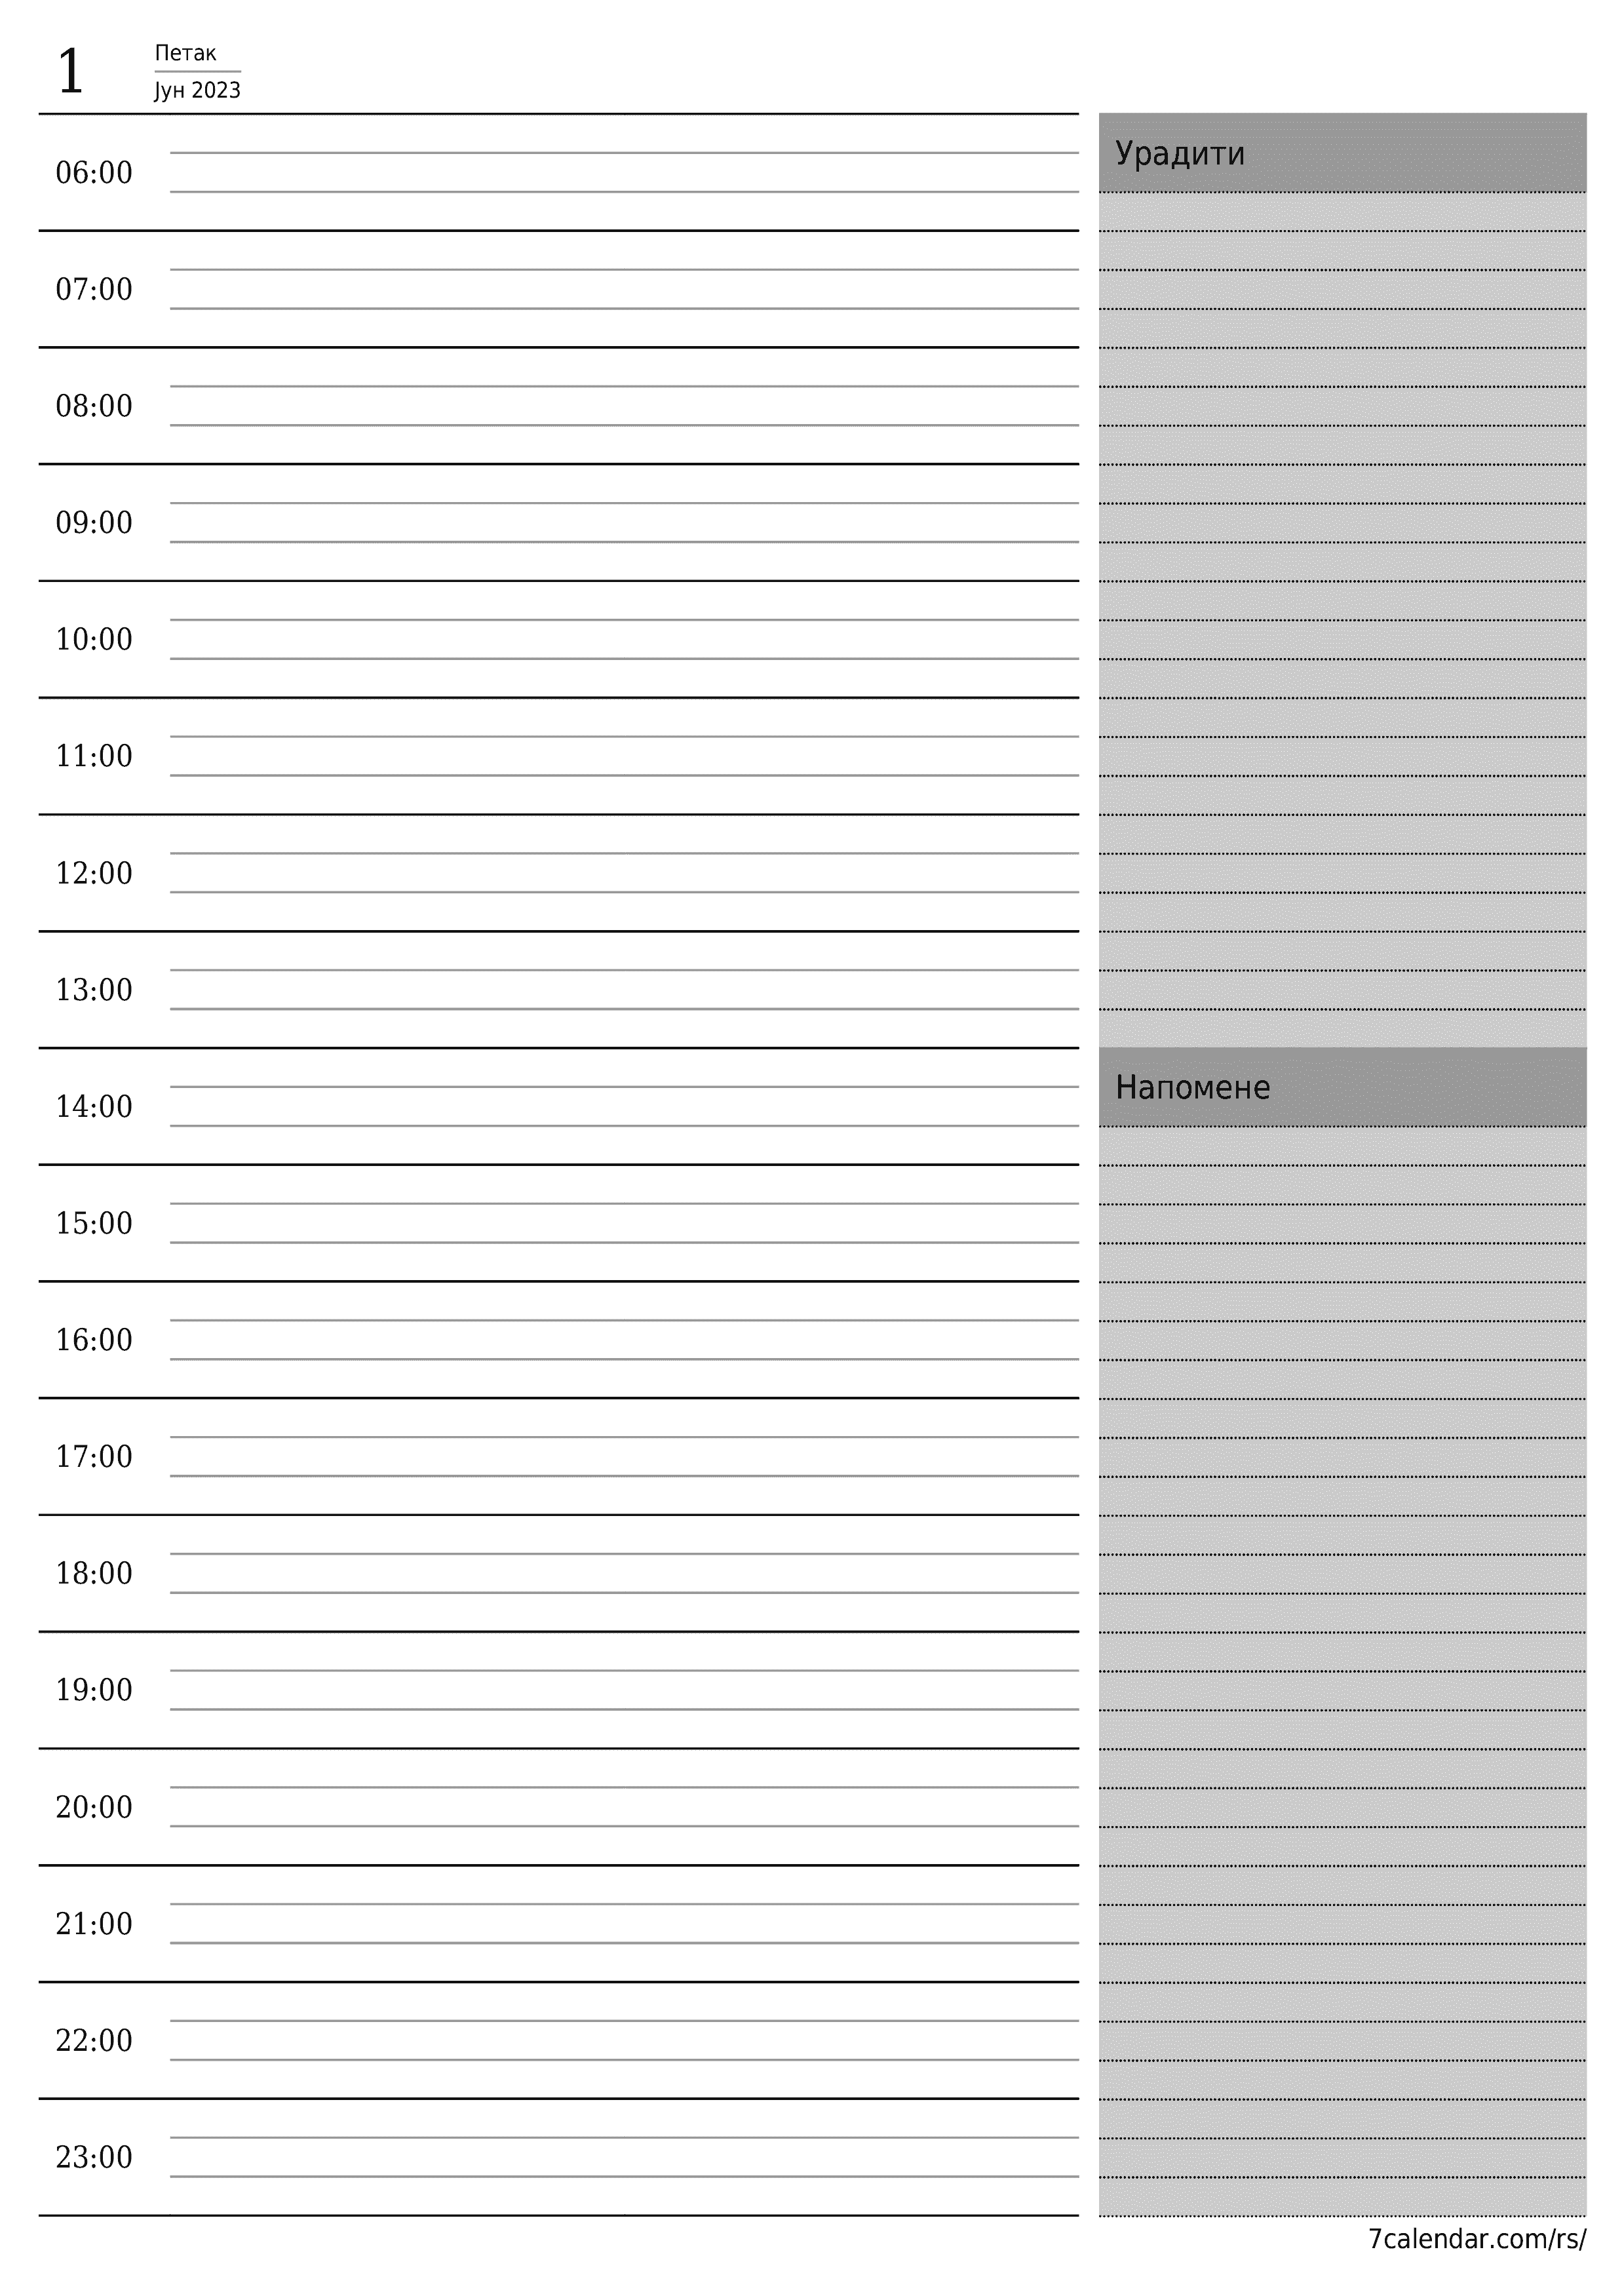  за штампање зидни шаблон а бесплатни вертикальниј Дневни планер календар Јун (Јун) 2023